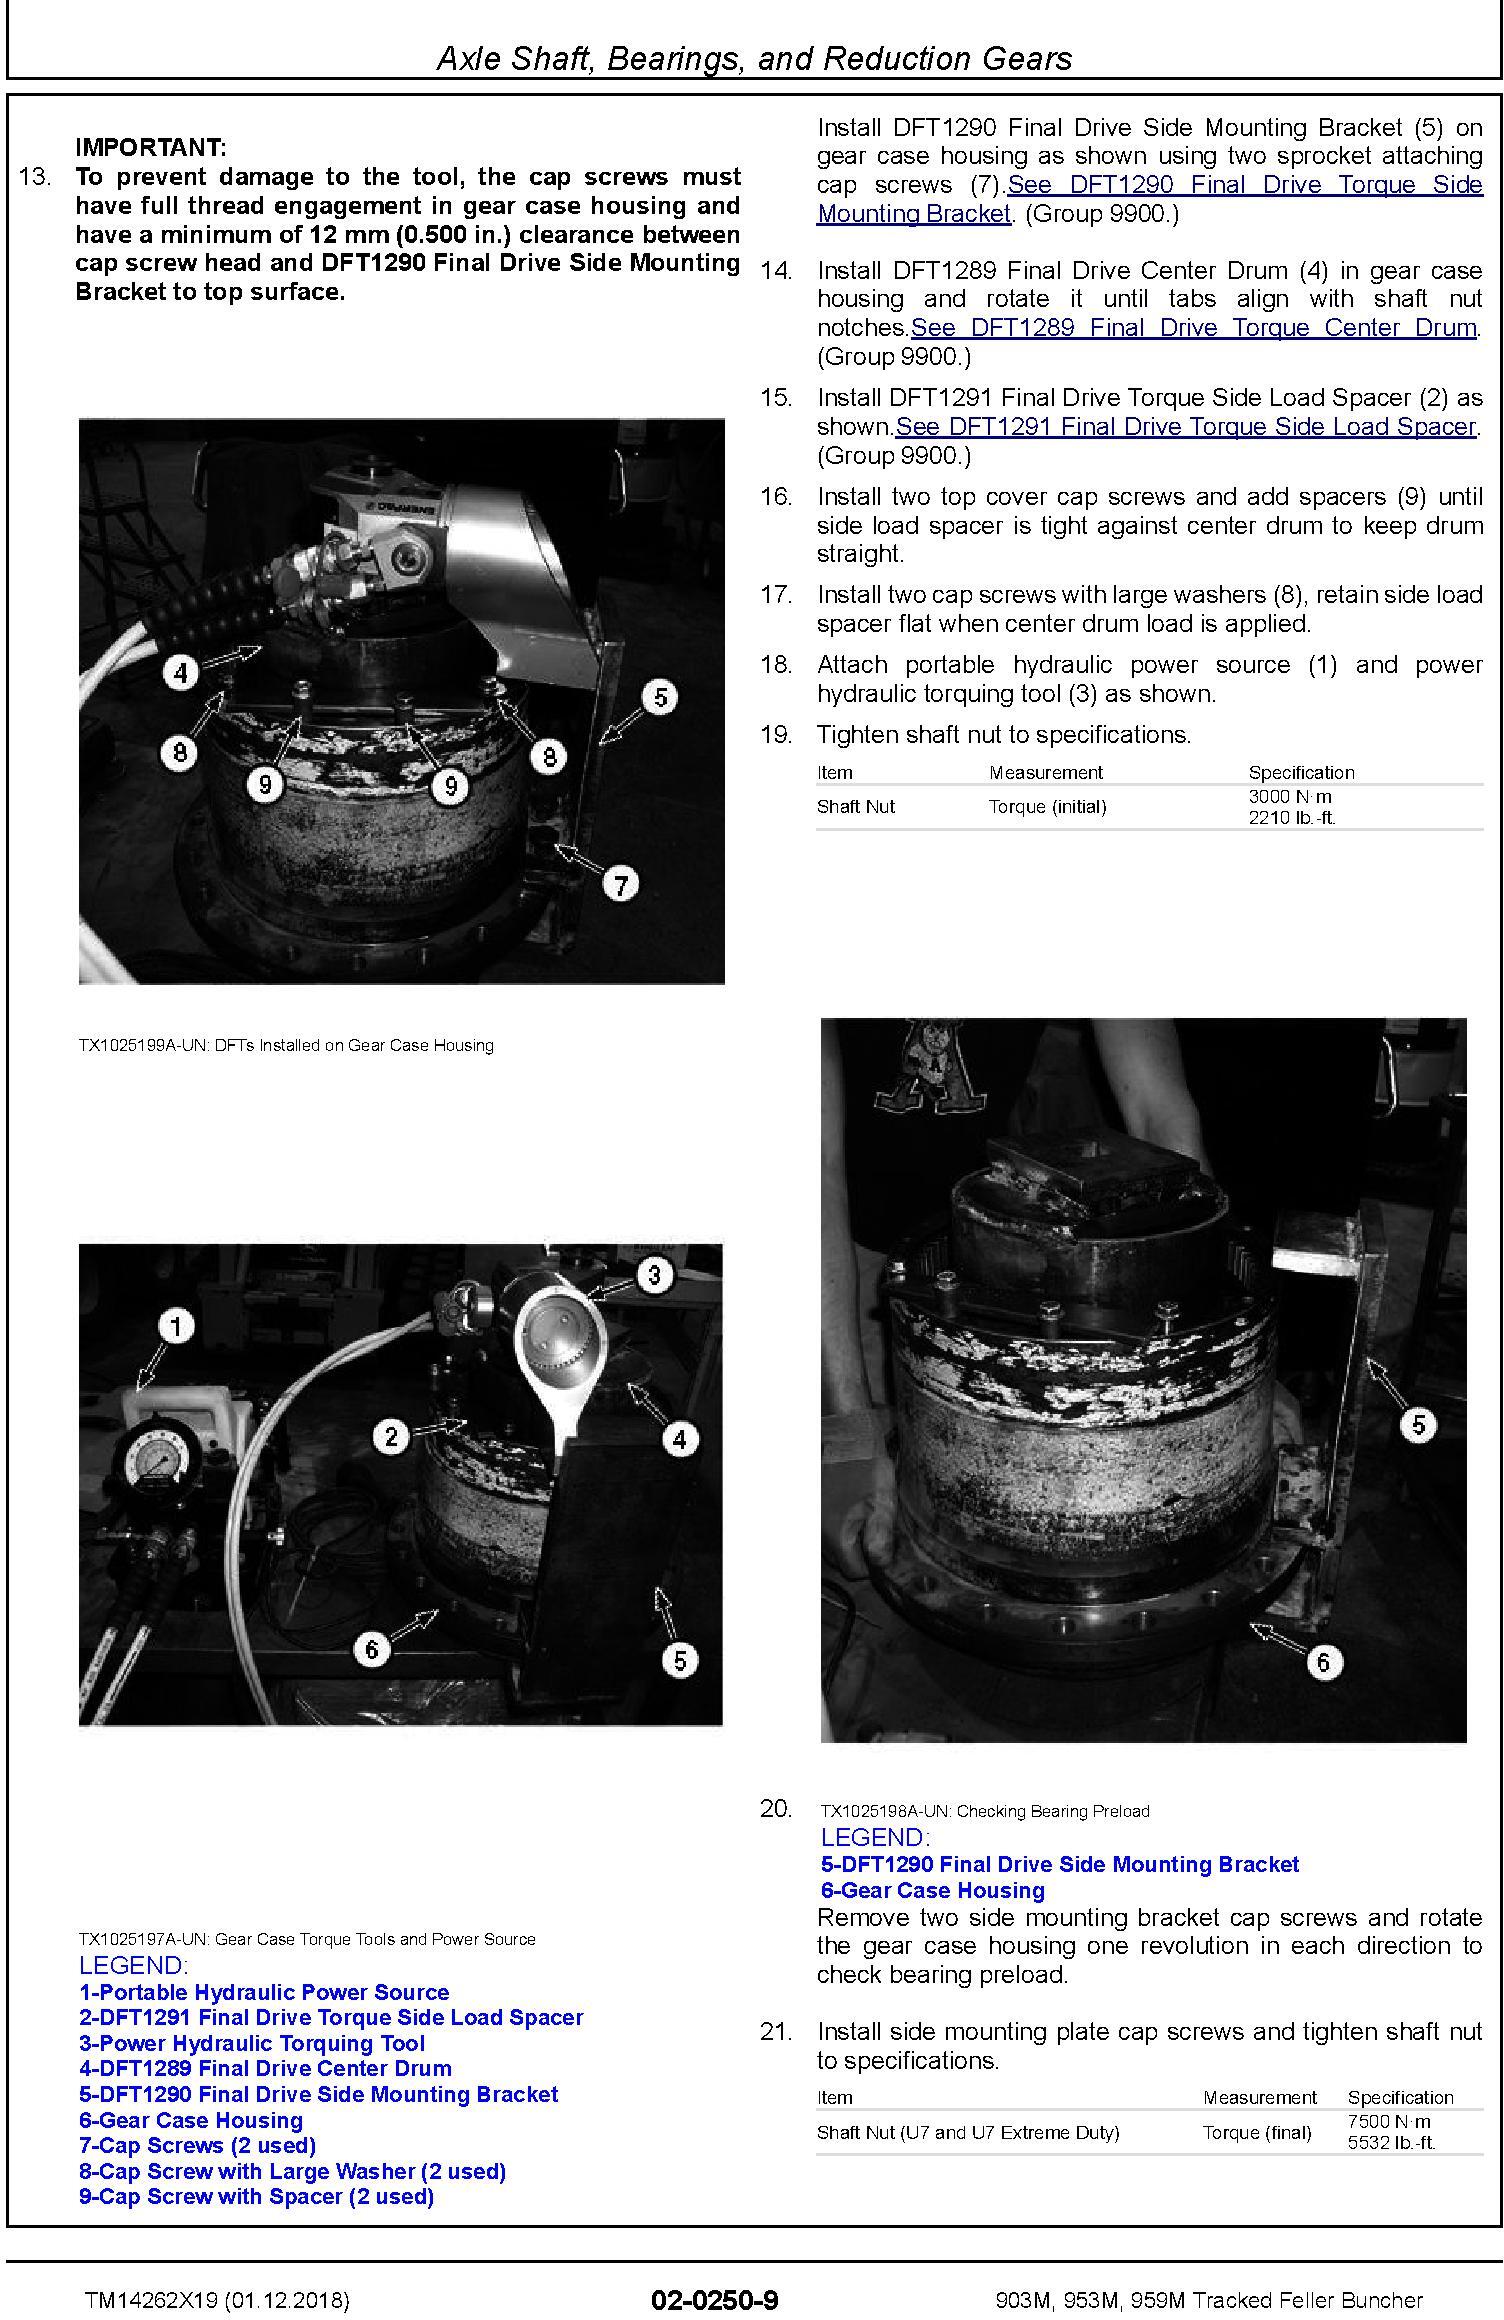 John Deere 903M, 953M, 959M (SN.F317982-,L317982-) Tracked Feller Buncher Repair Manual (TM14262X19) - 2